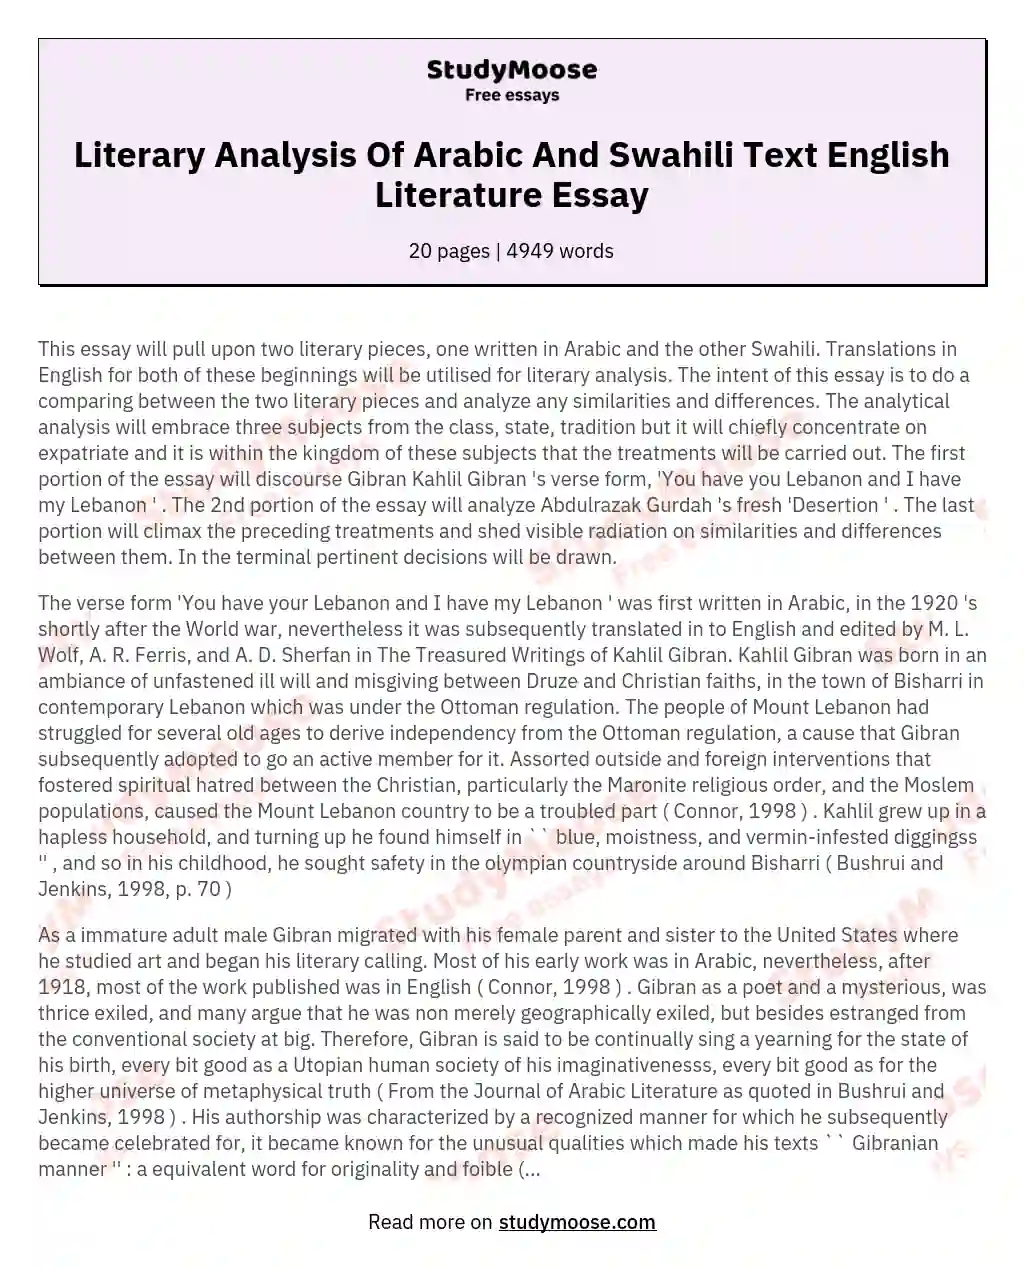 Literary Analysis Of Arabic And Swahili Text English Literature Essay